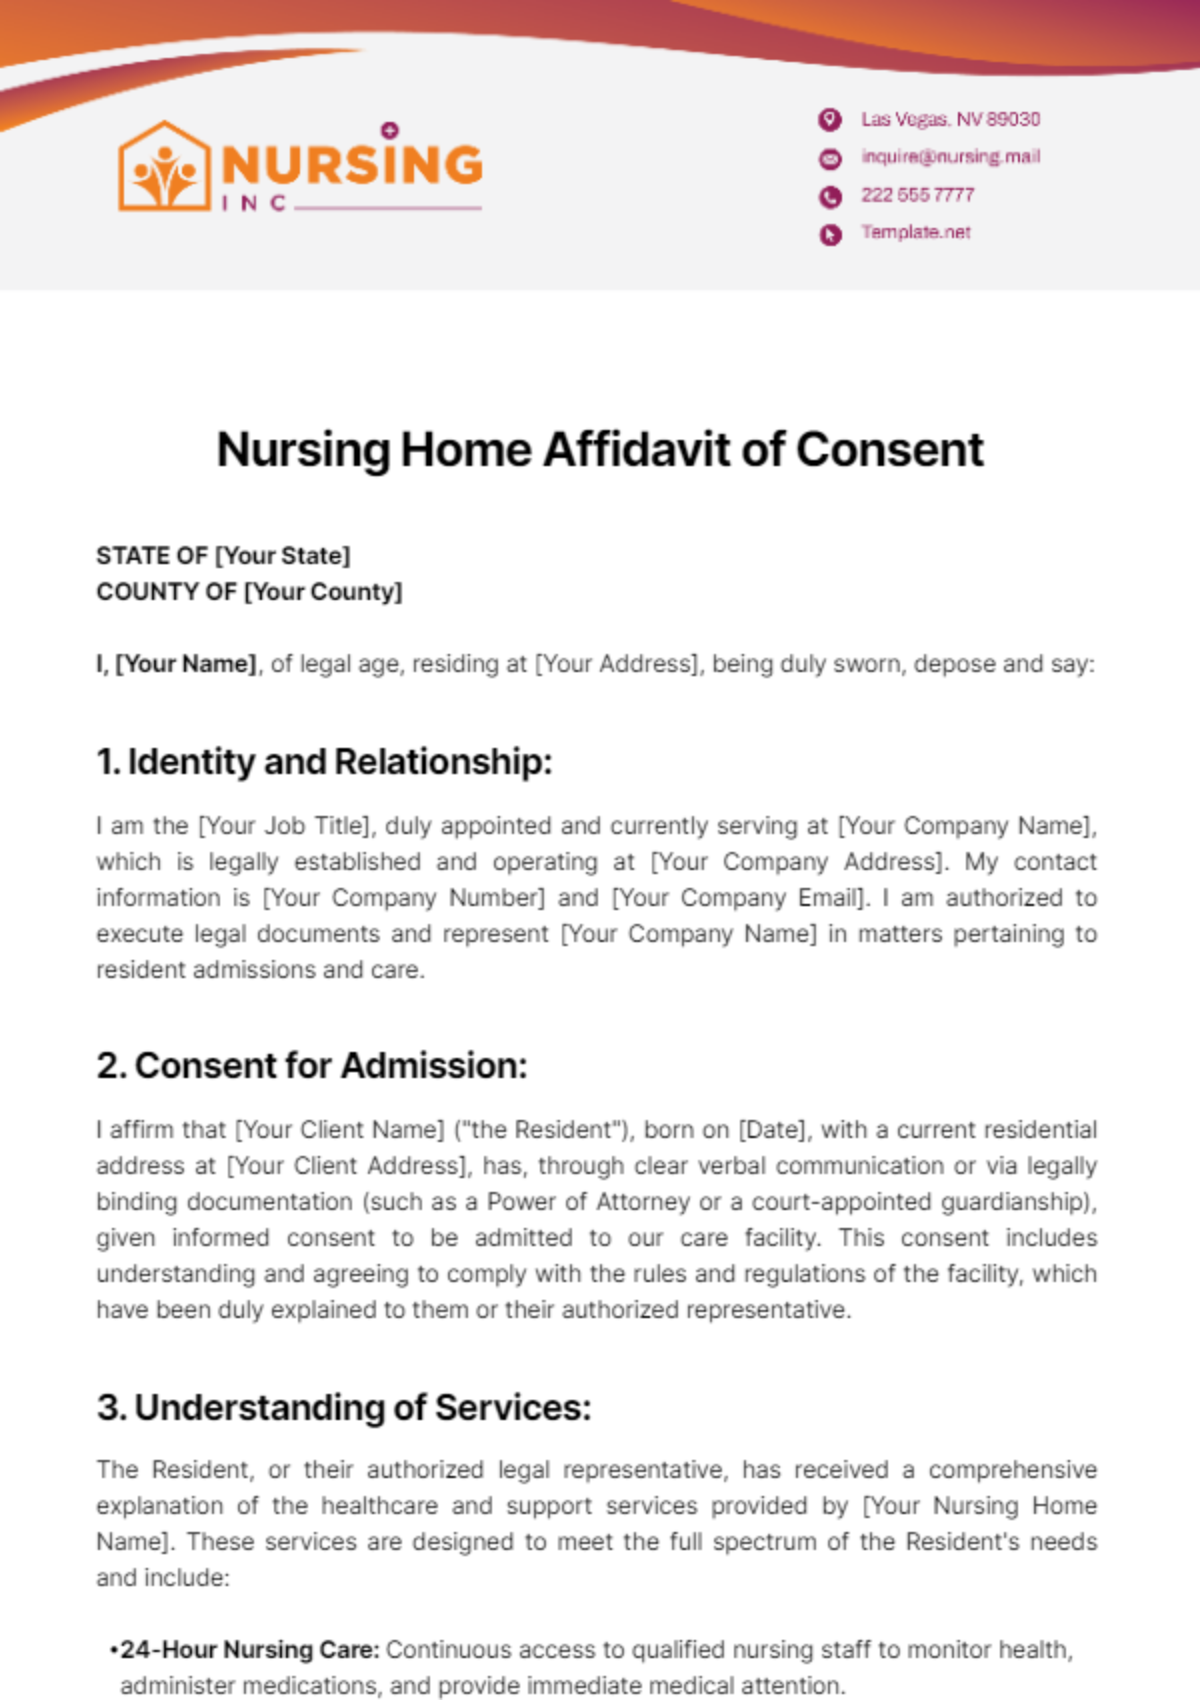 Nursing Home Affidavit of Consent Template